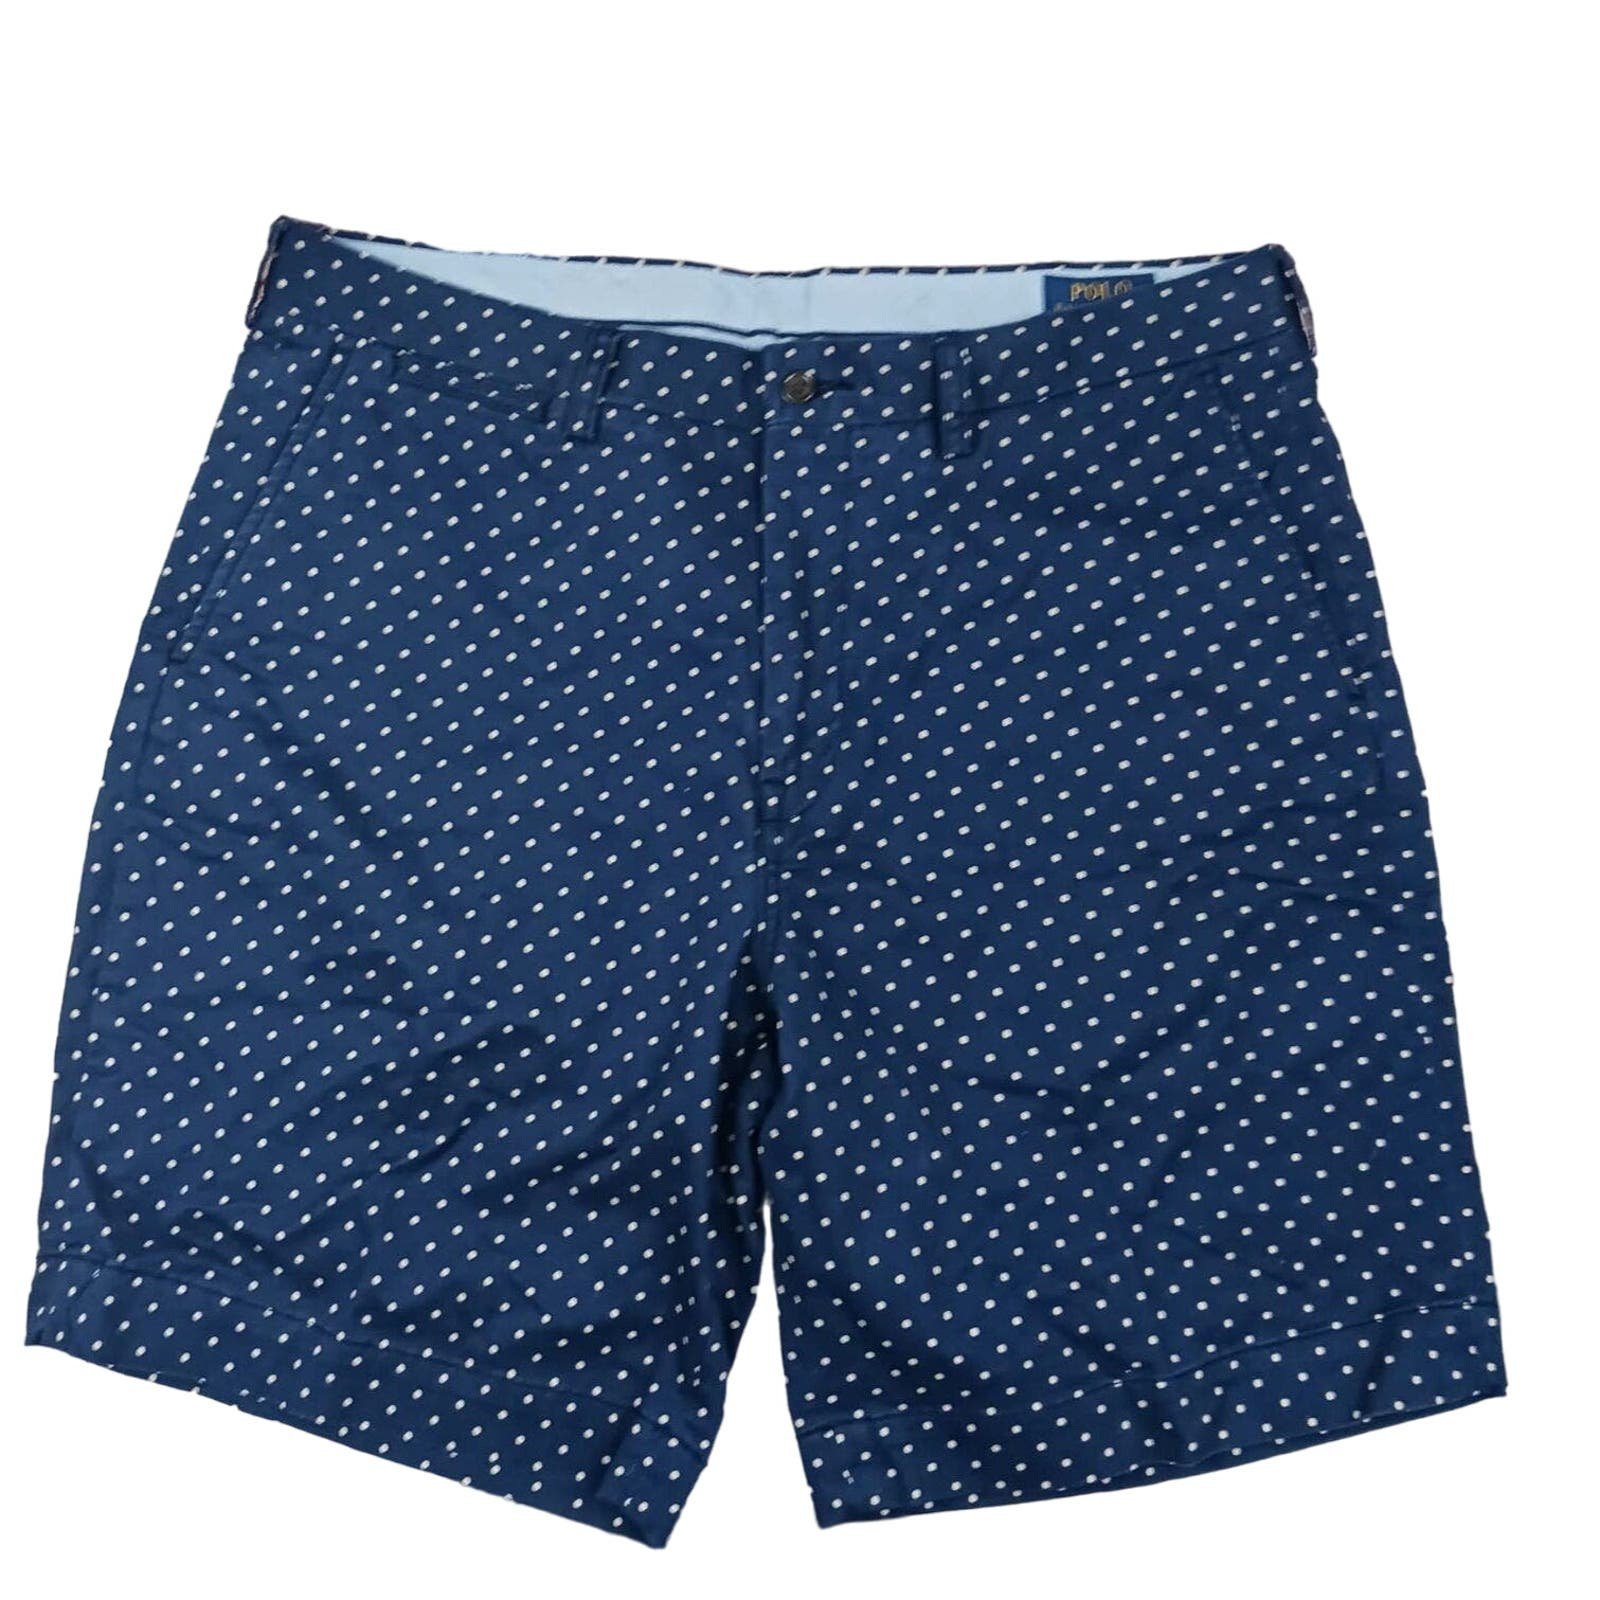 Polo Ralph Lauren Shorts Mens 36 Navy Polka Dots 9